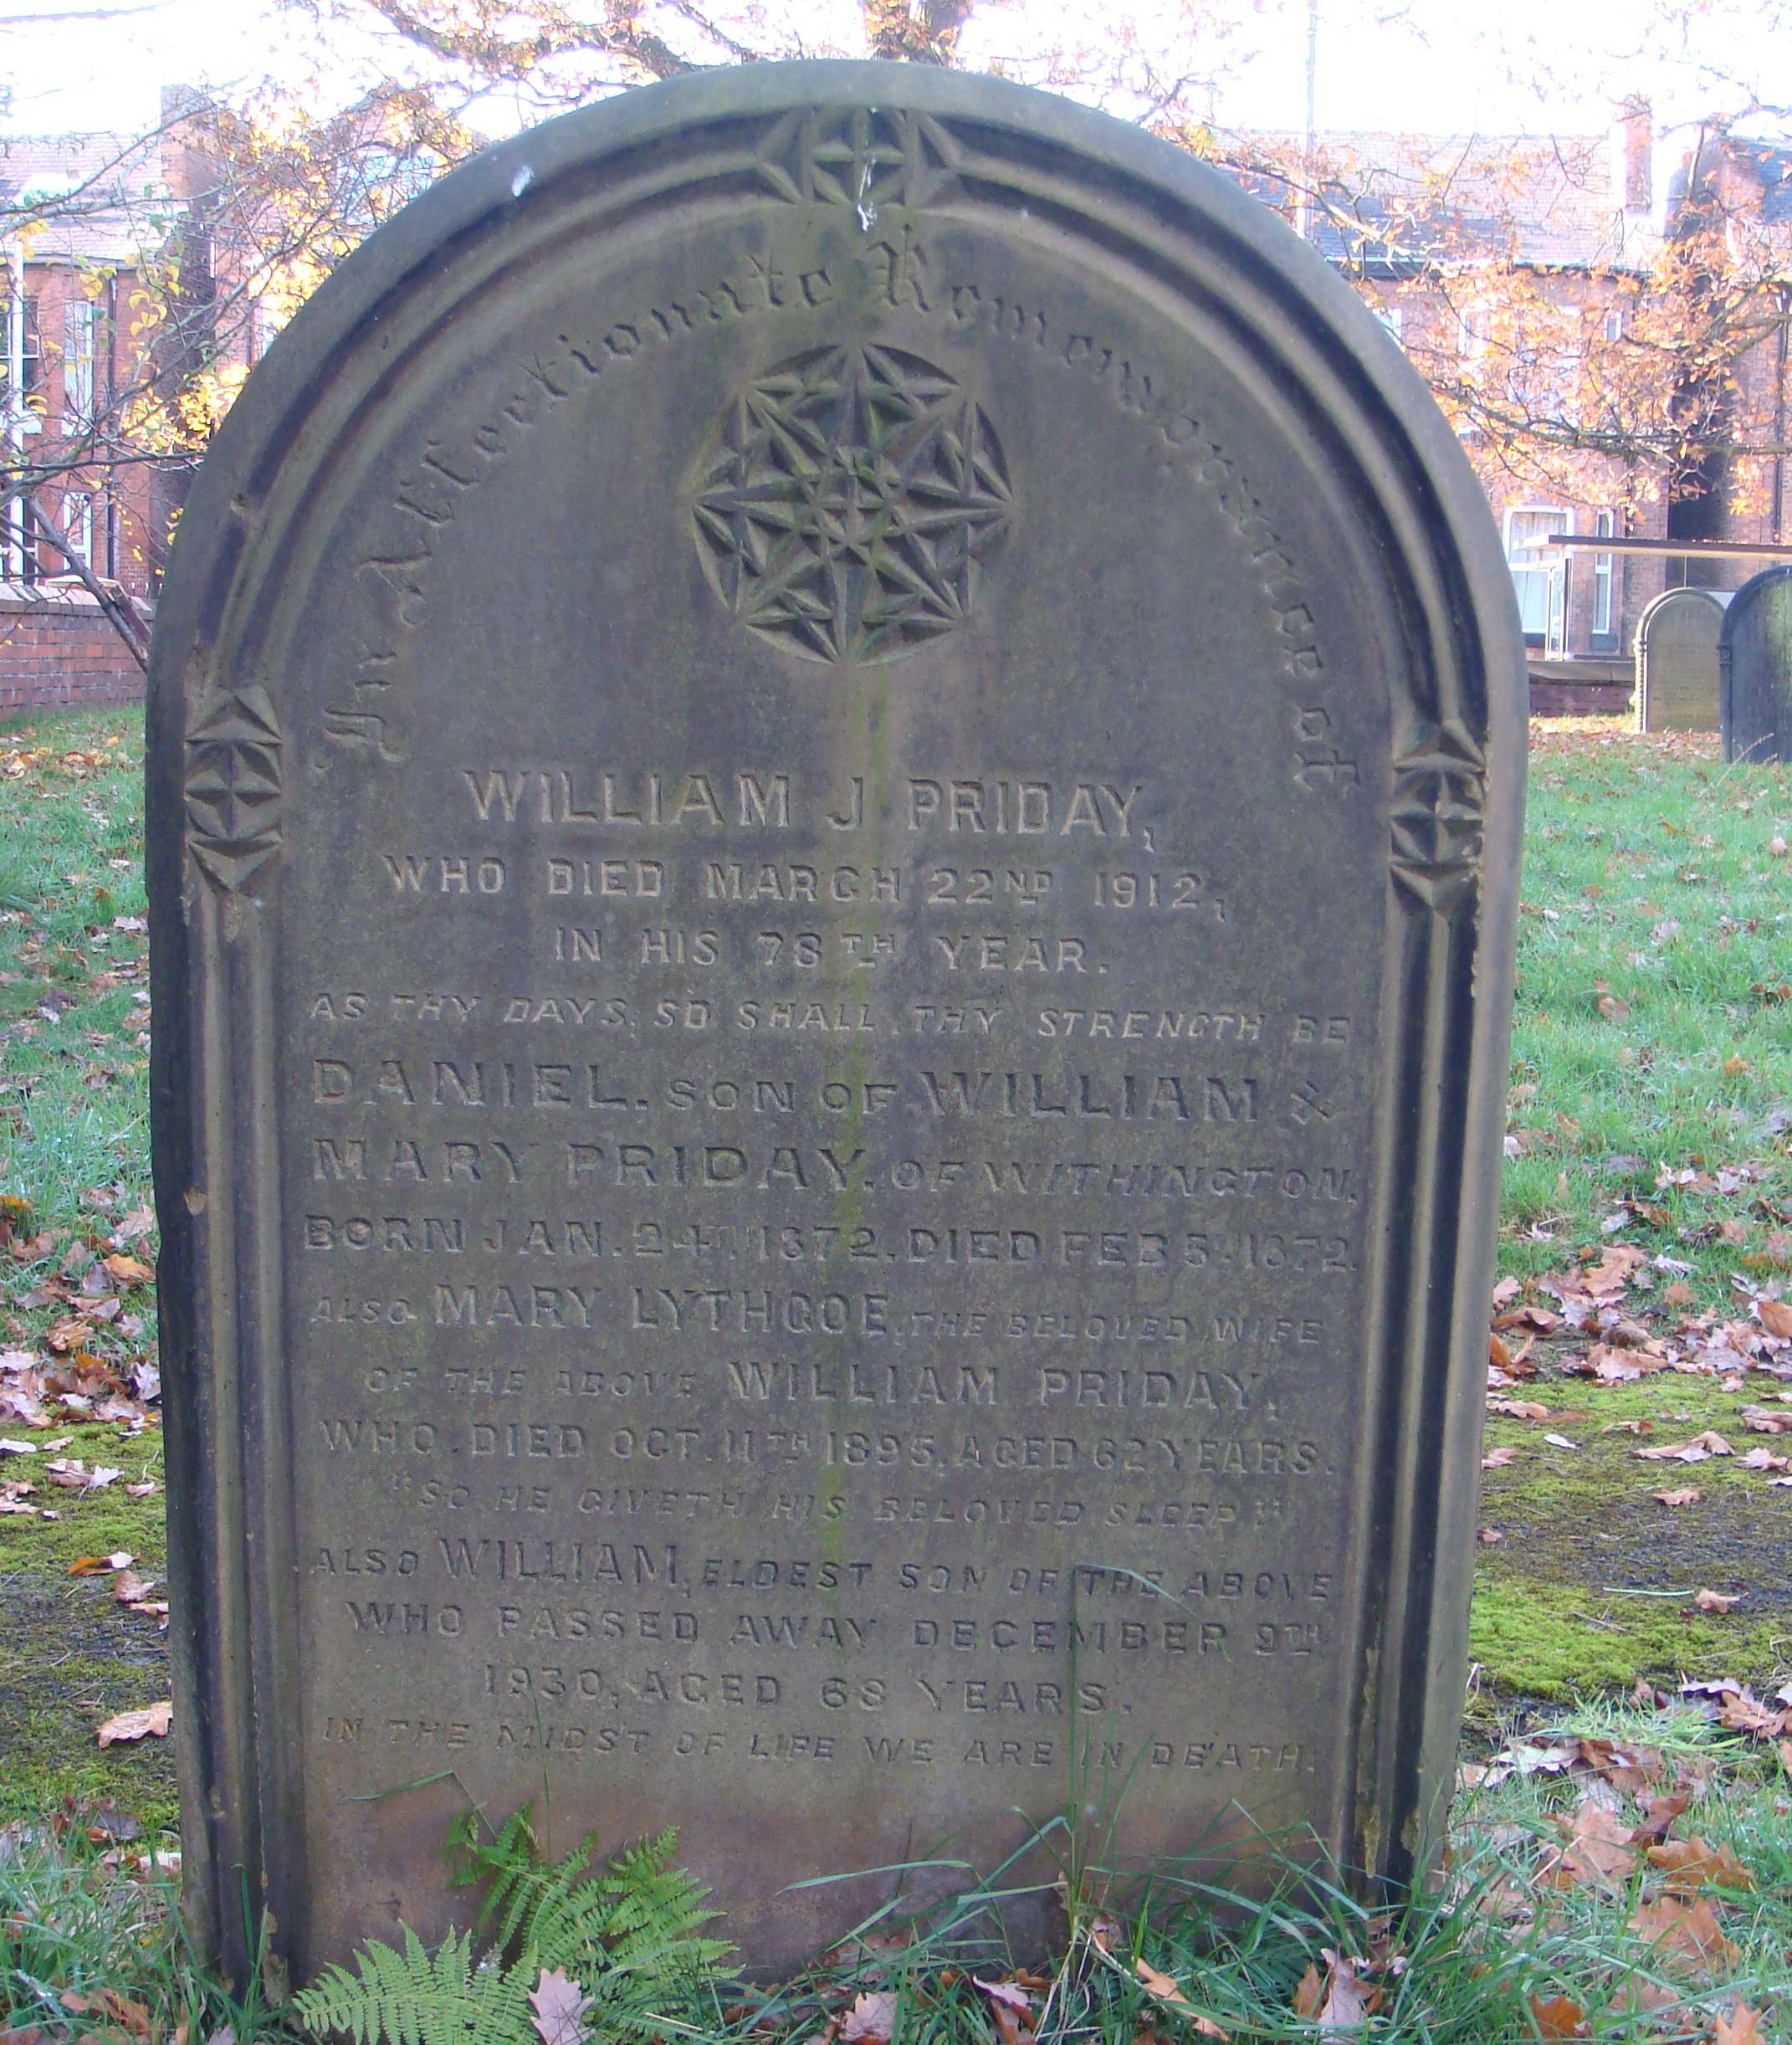 William Priday grave, Withington